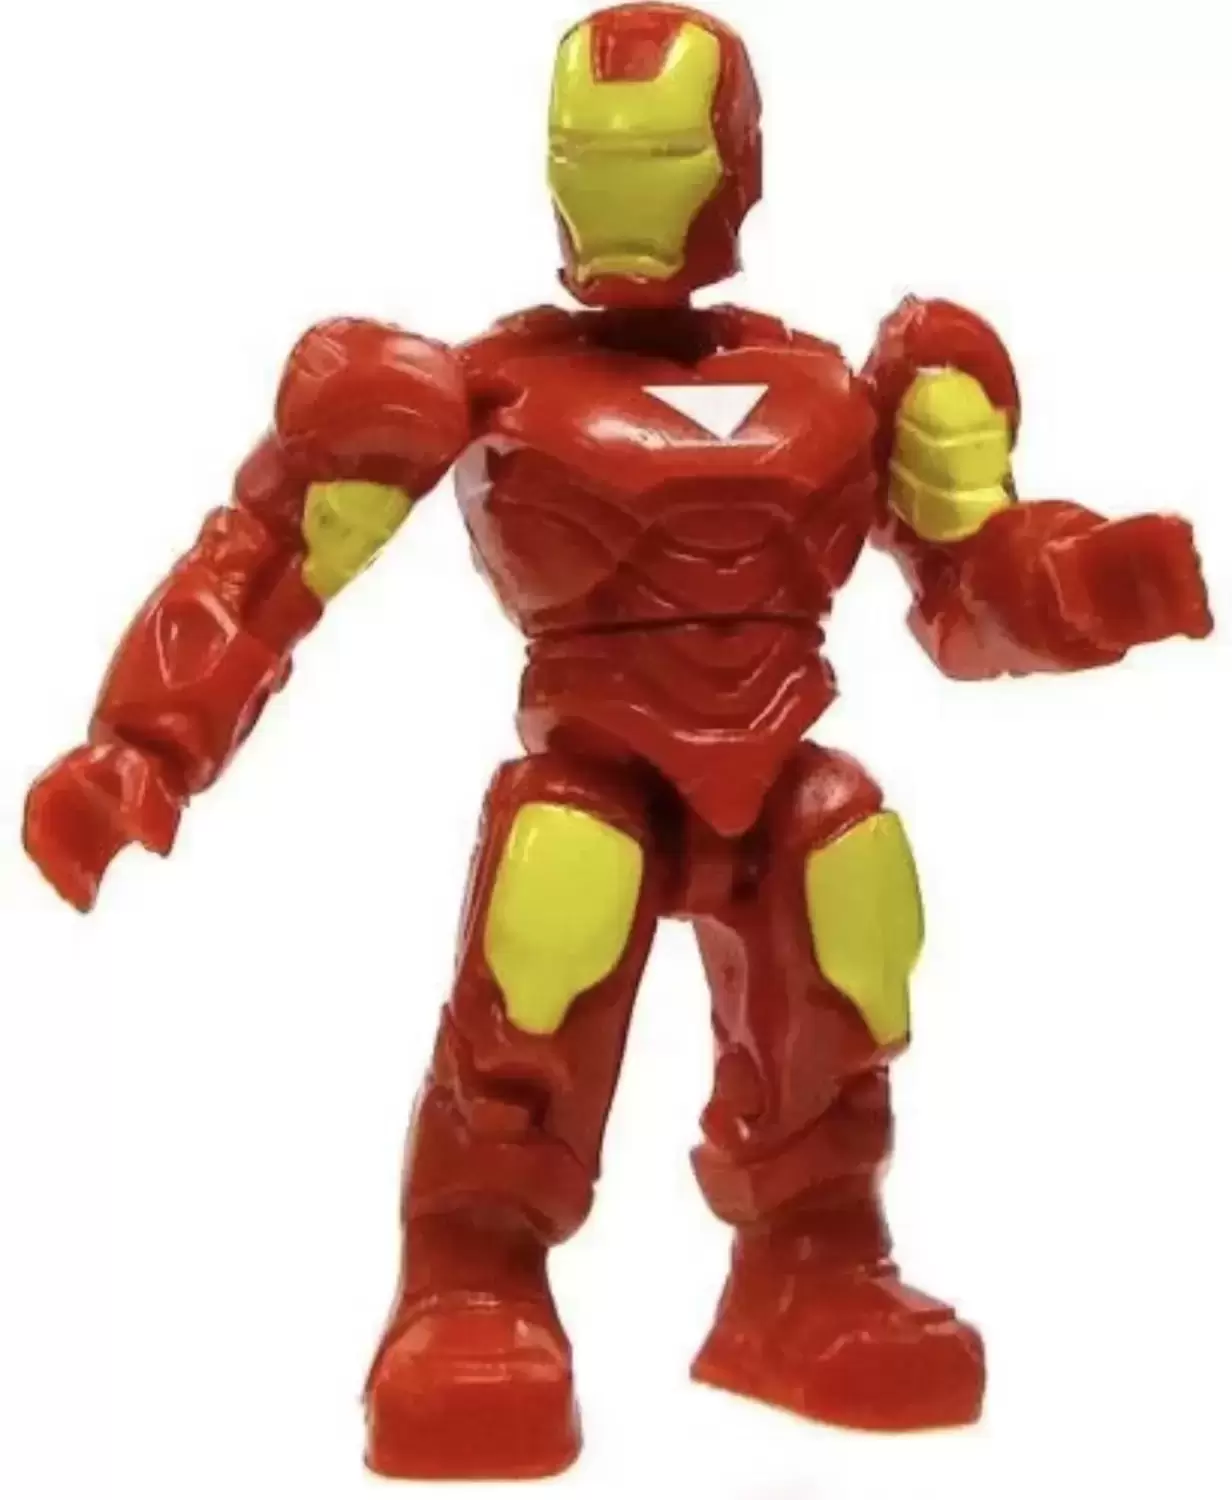 Series 1 - Invincible Iron Man